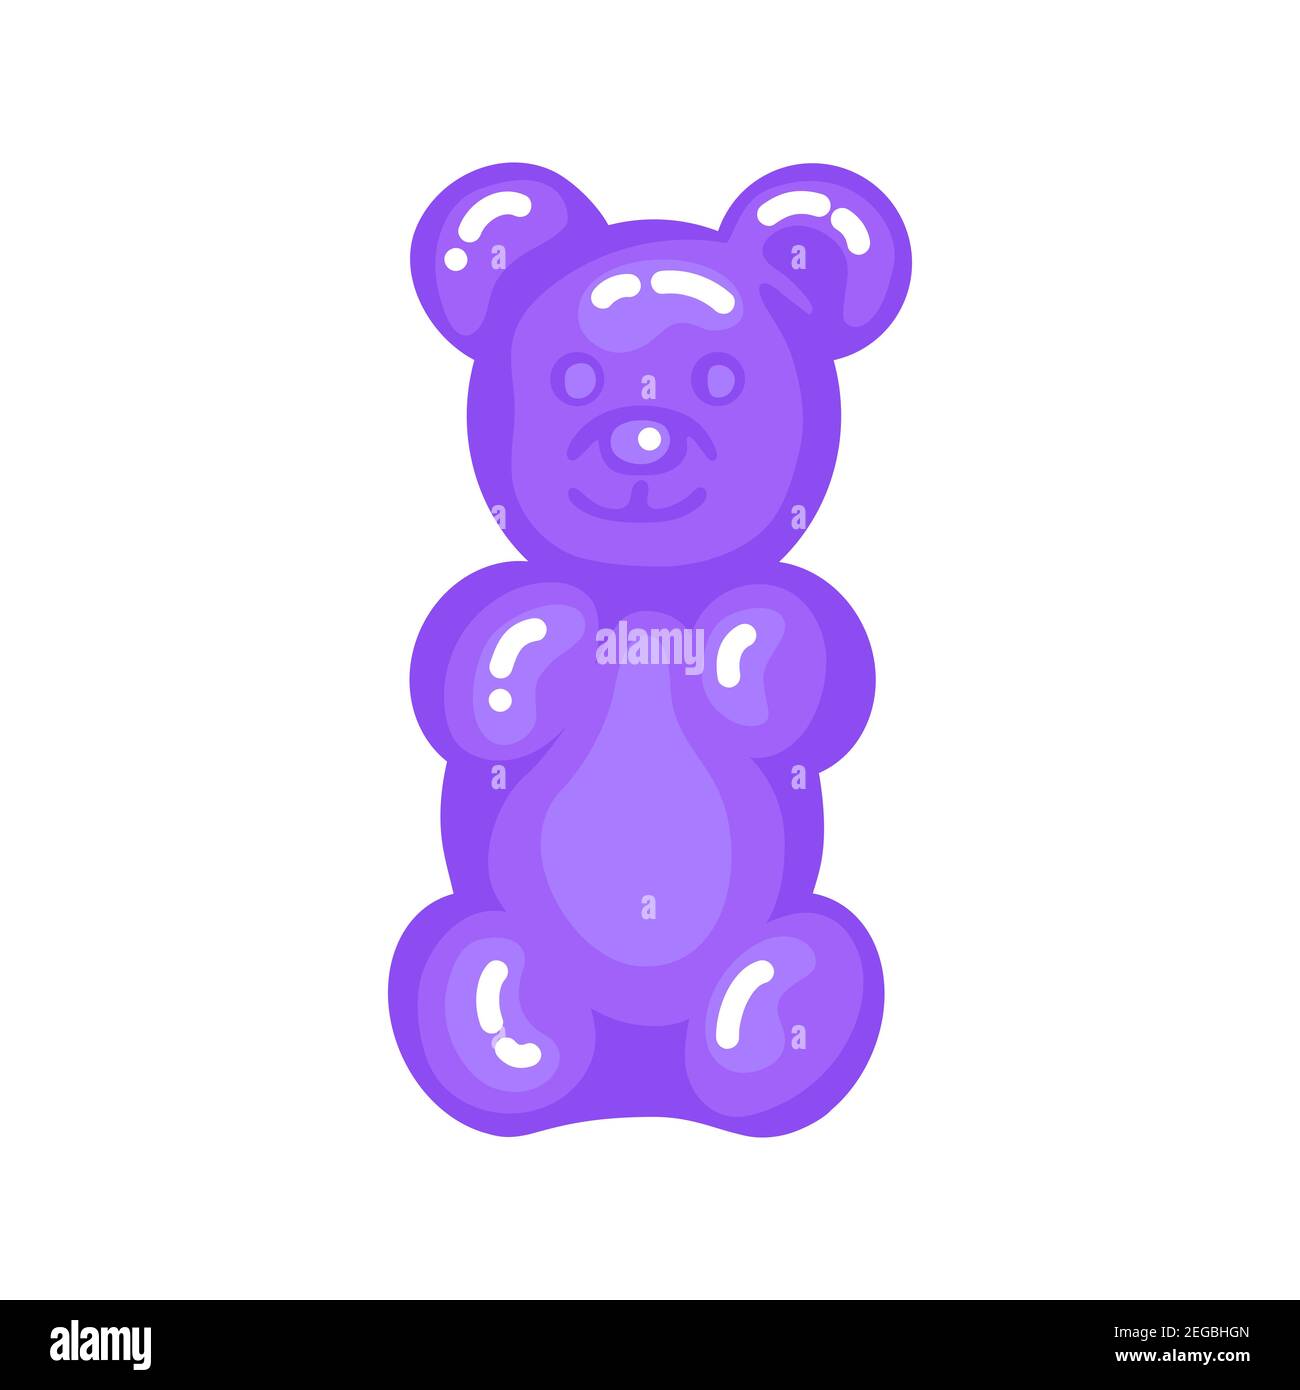 Gummy Bear Cartoon Stock Illustrations, Cliparts and Royalty Free